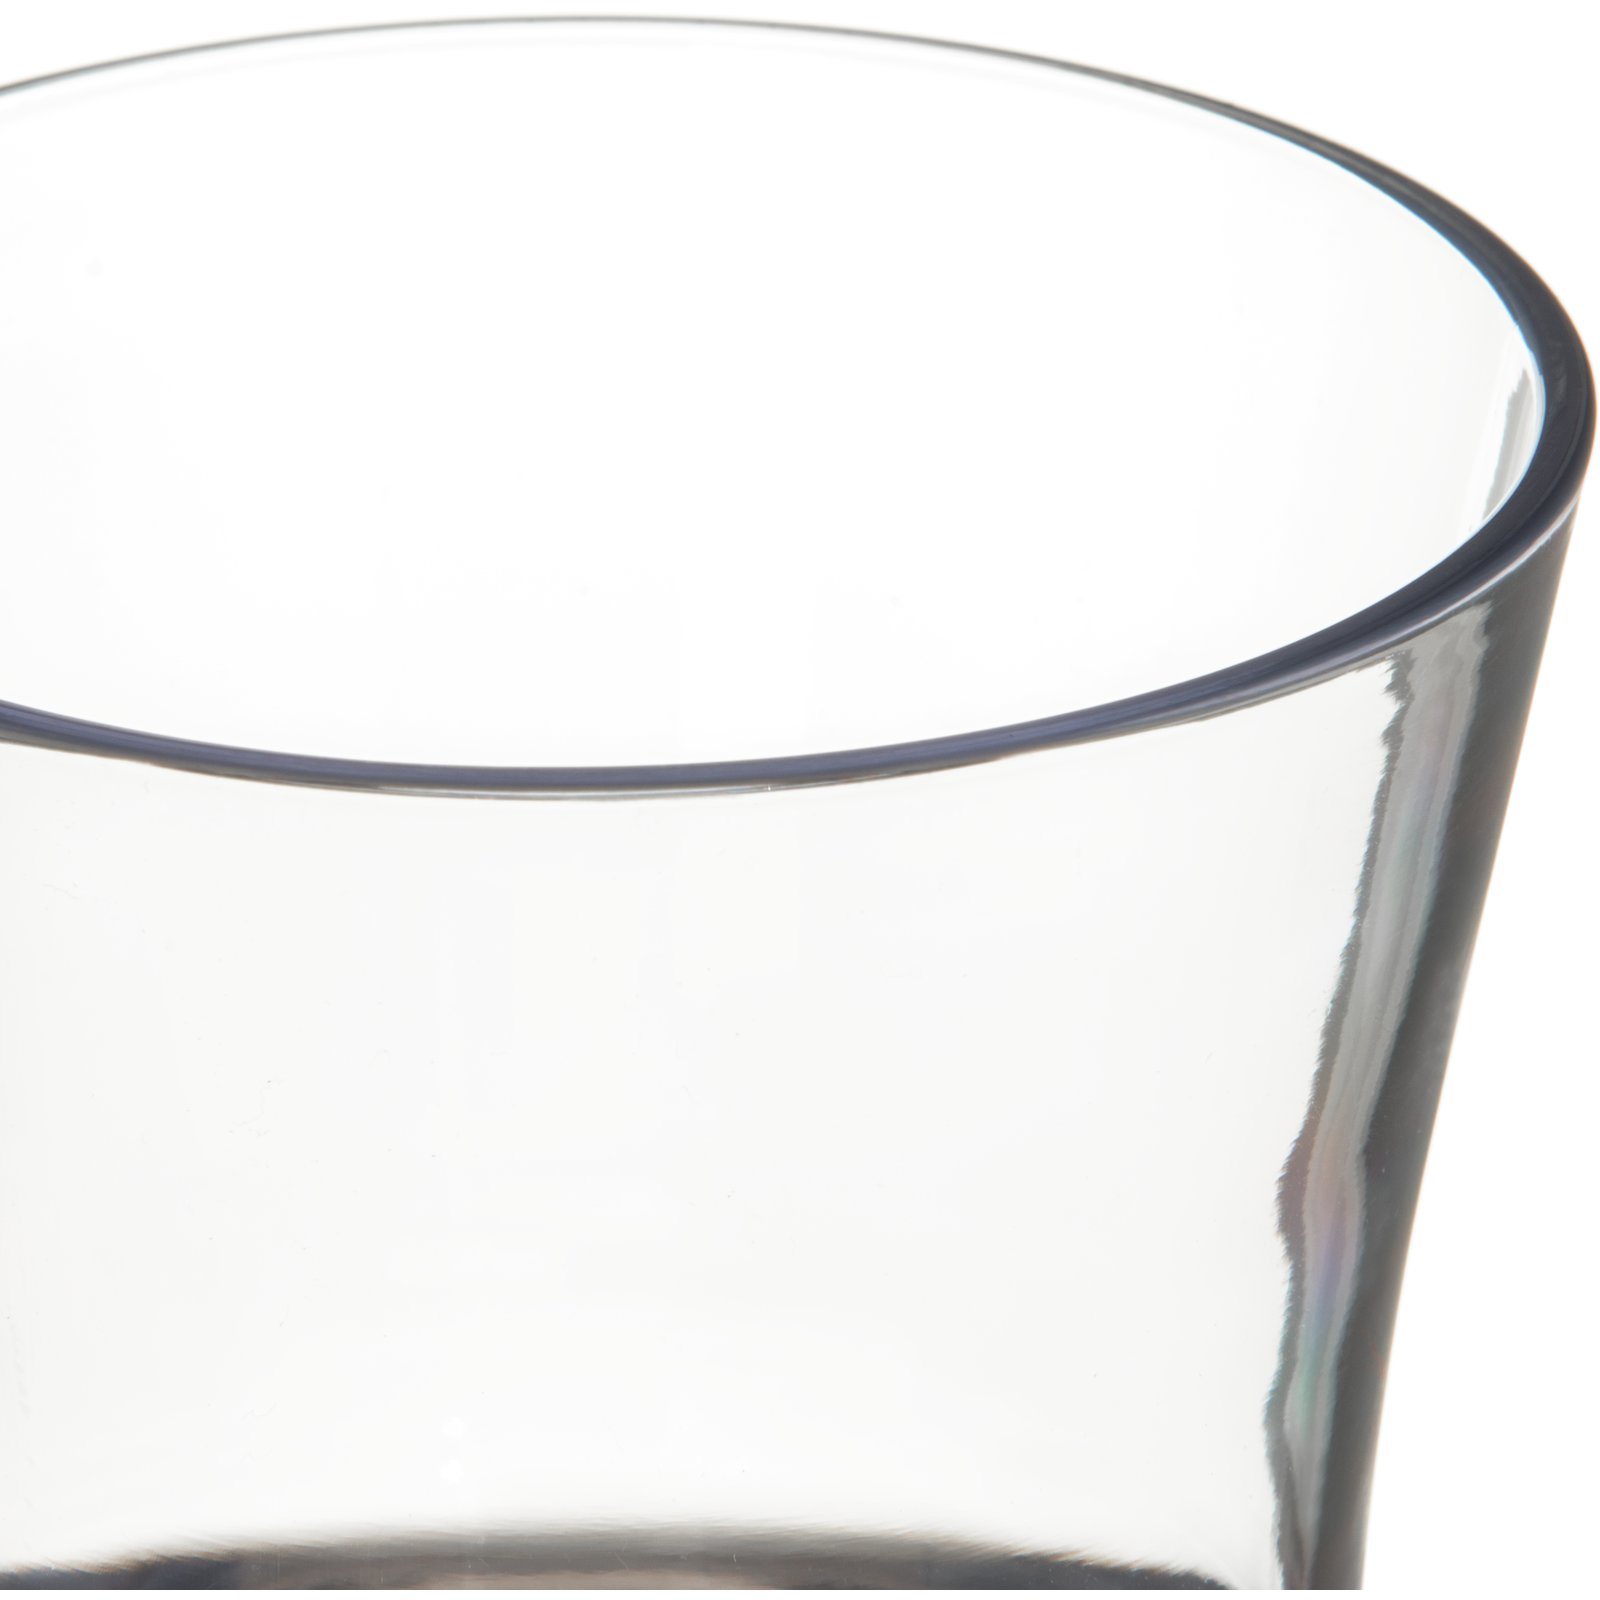 Eparé 9 oz Double-Wall Whiskey Glass (Set of 2)